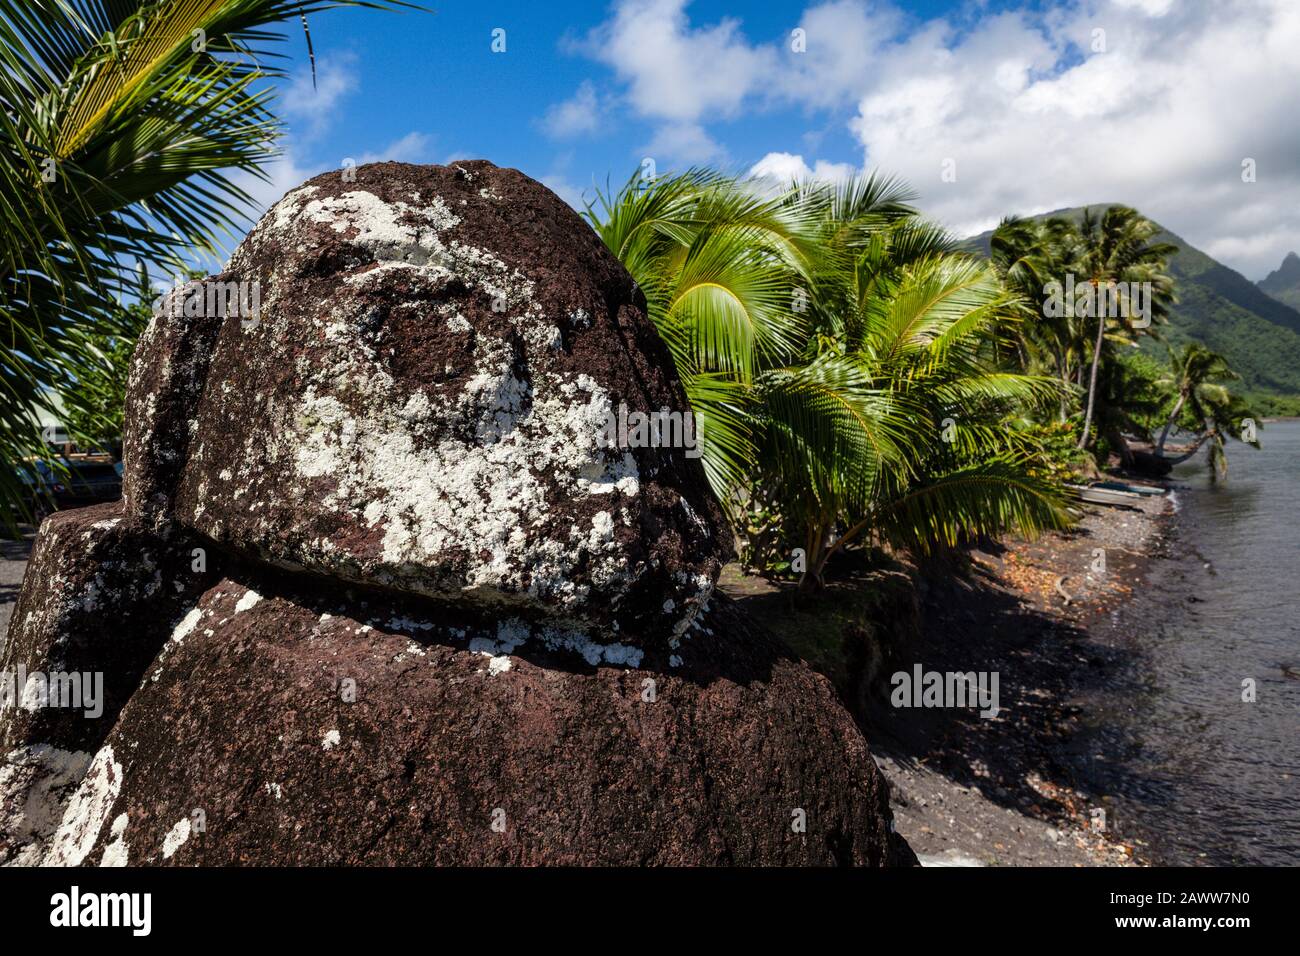 Monumental stone statue inTautira, Tahiti, French Polynesia Stock Photo